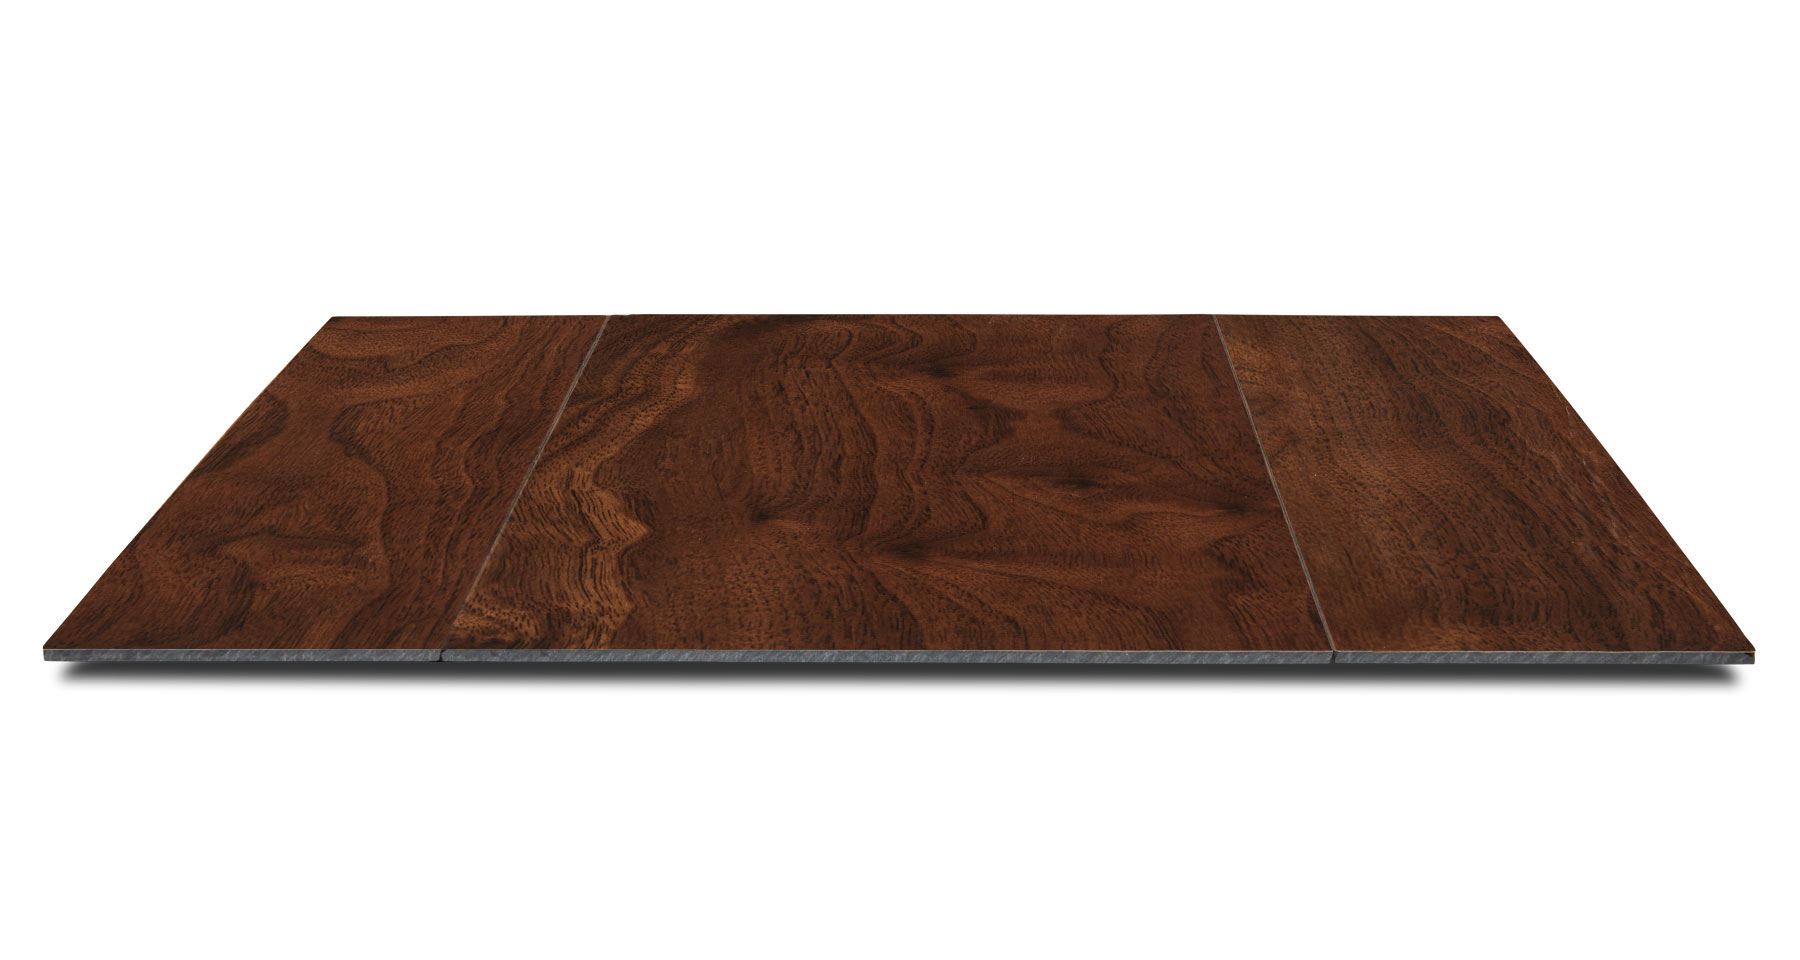 Vallette Vinyl Plank Flooring